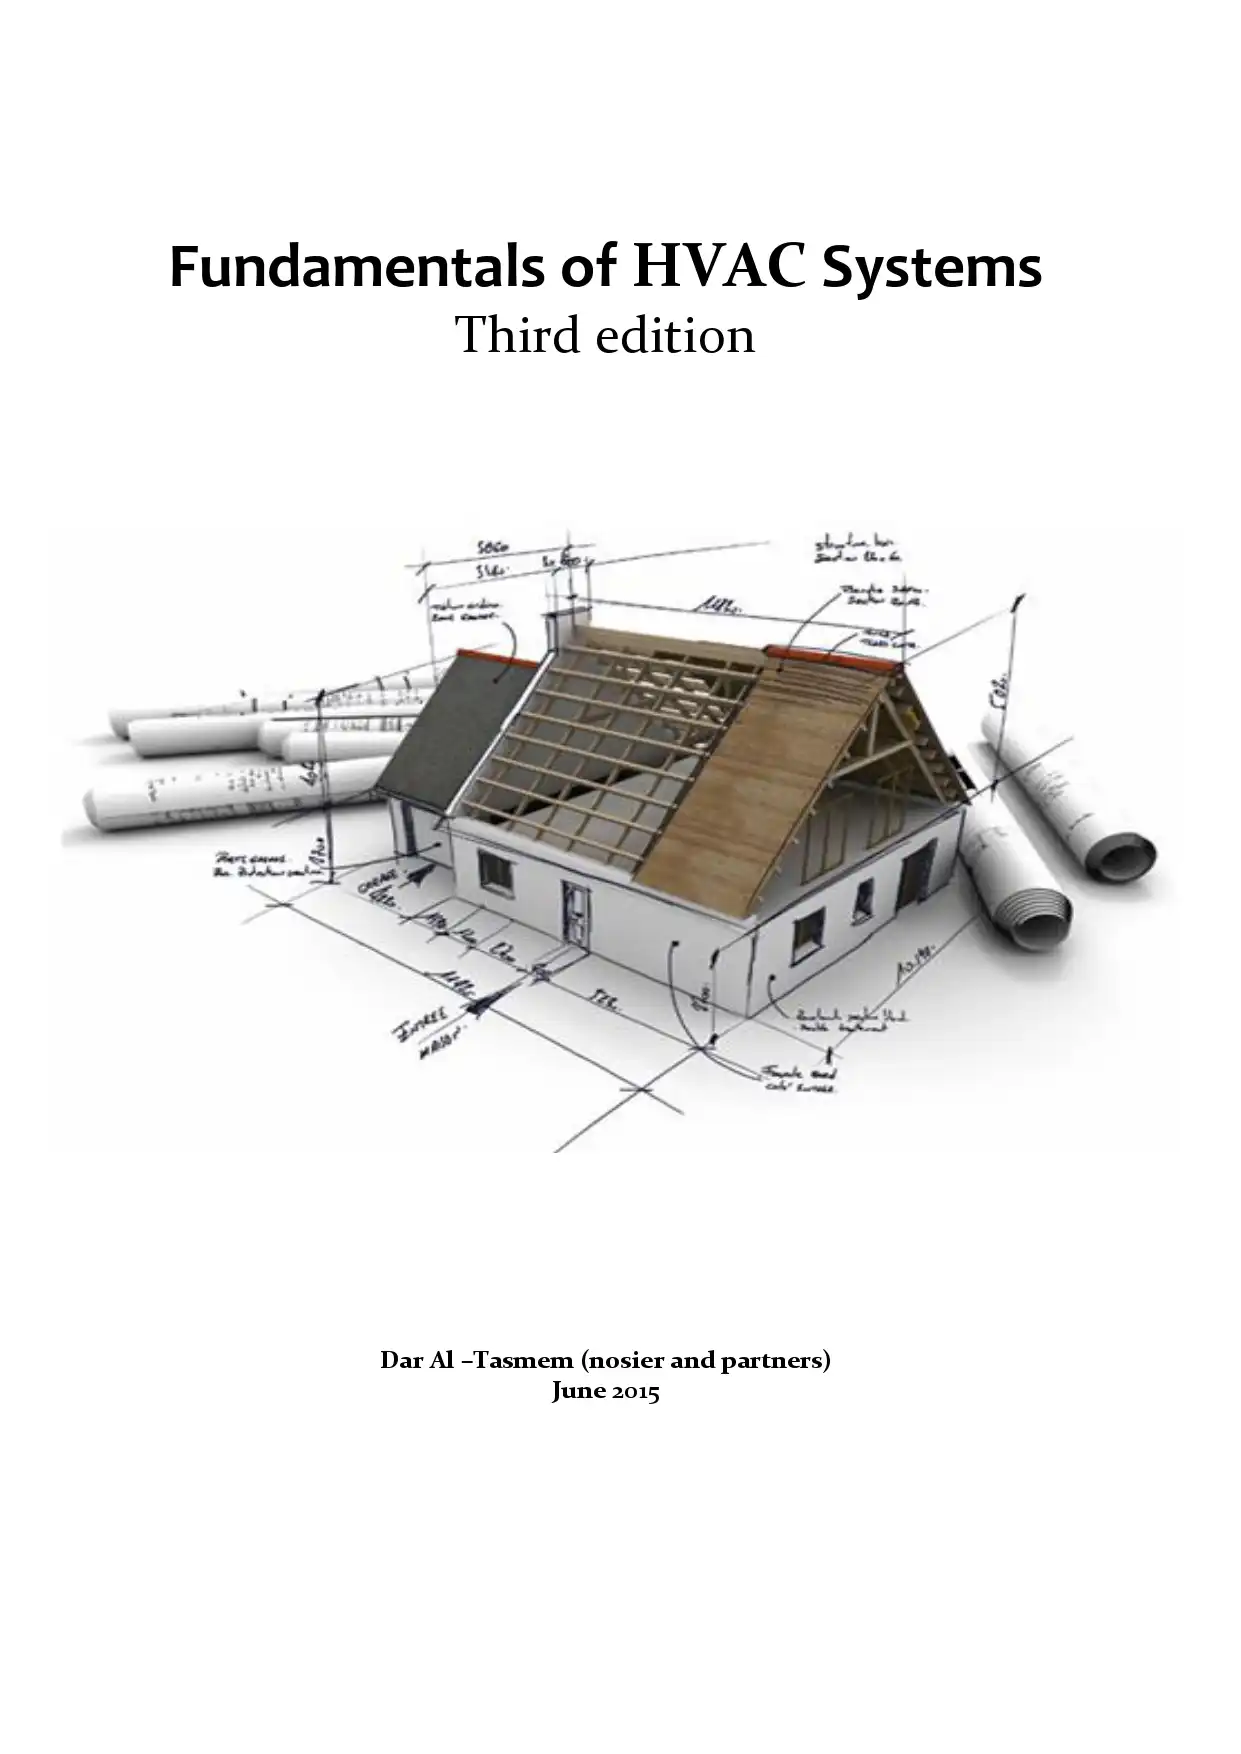 Fundamentals of HVAC Systems Third Edition